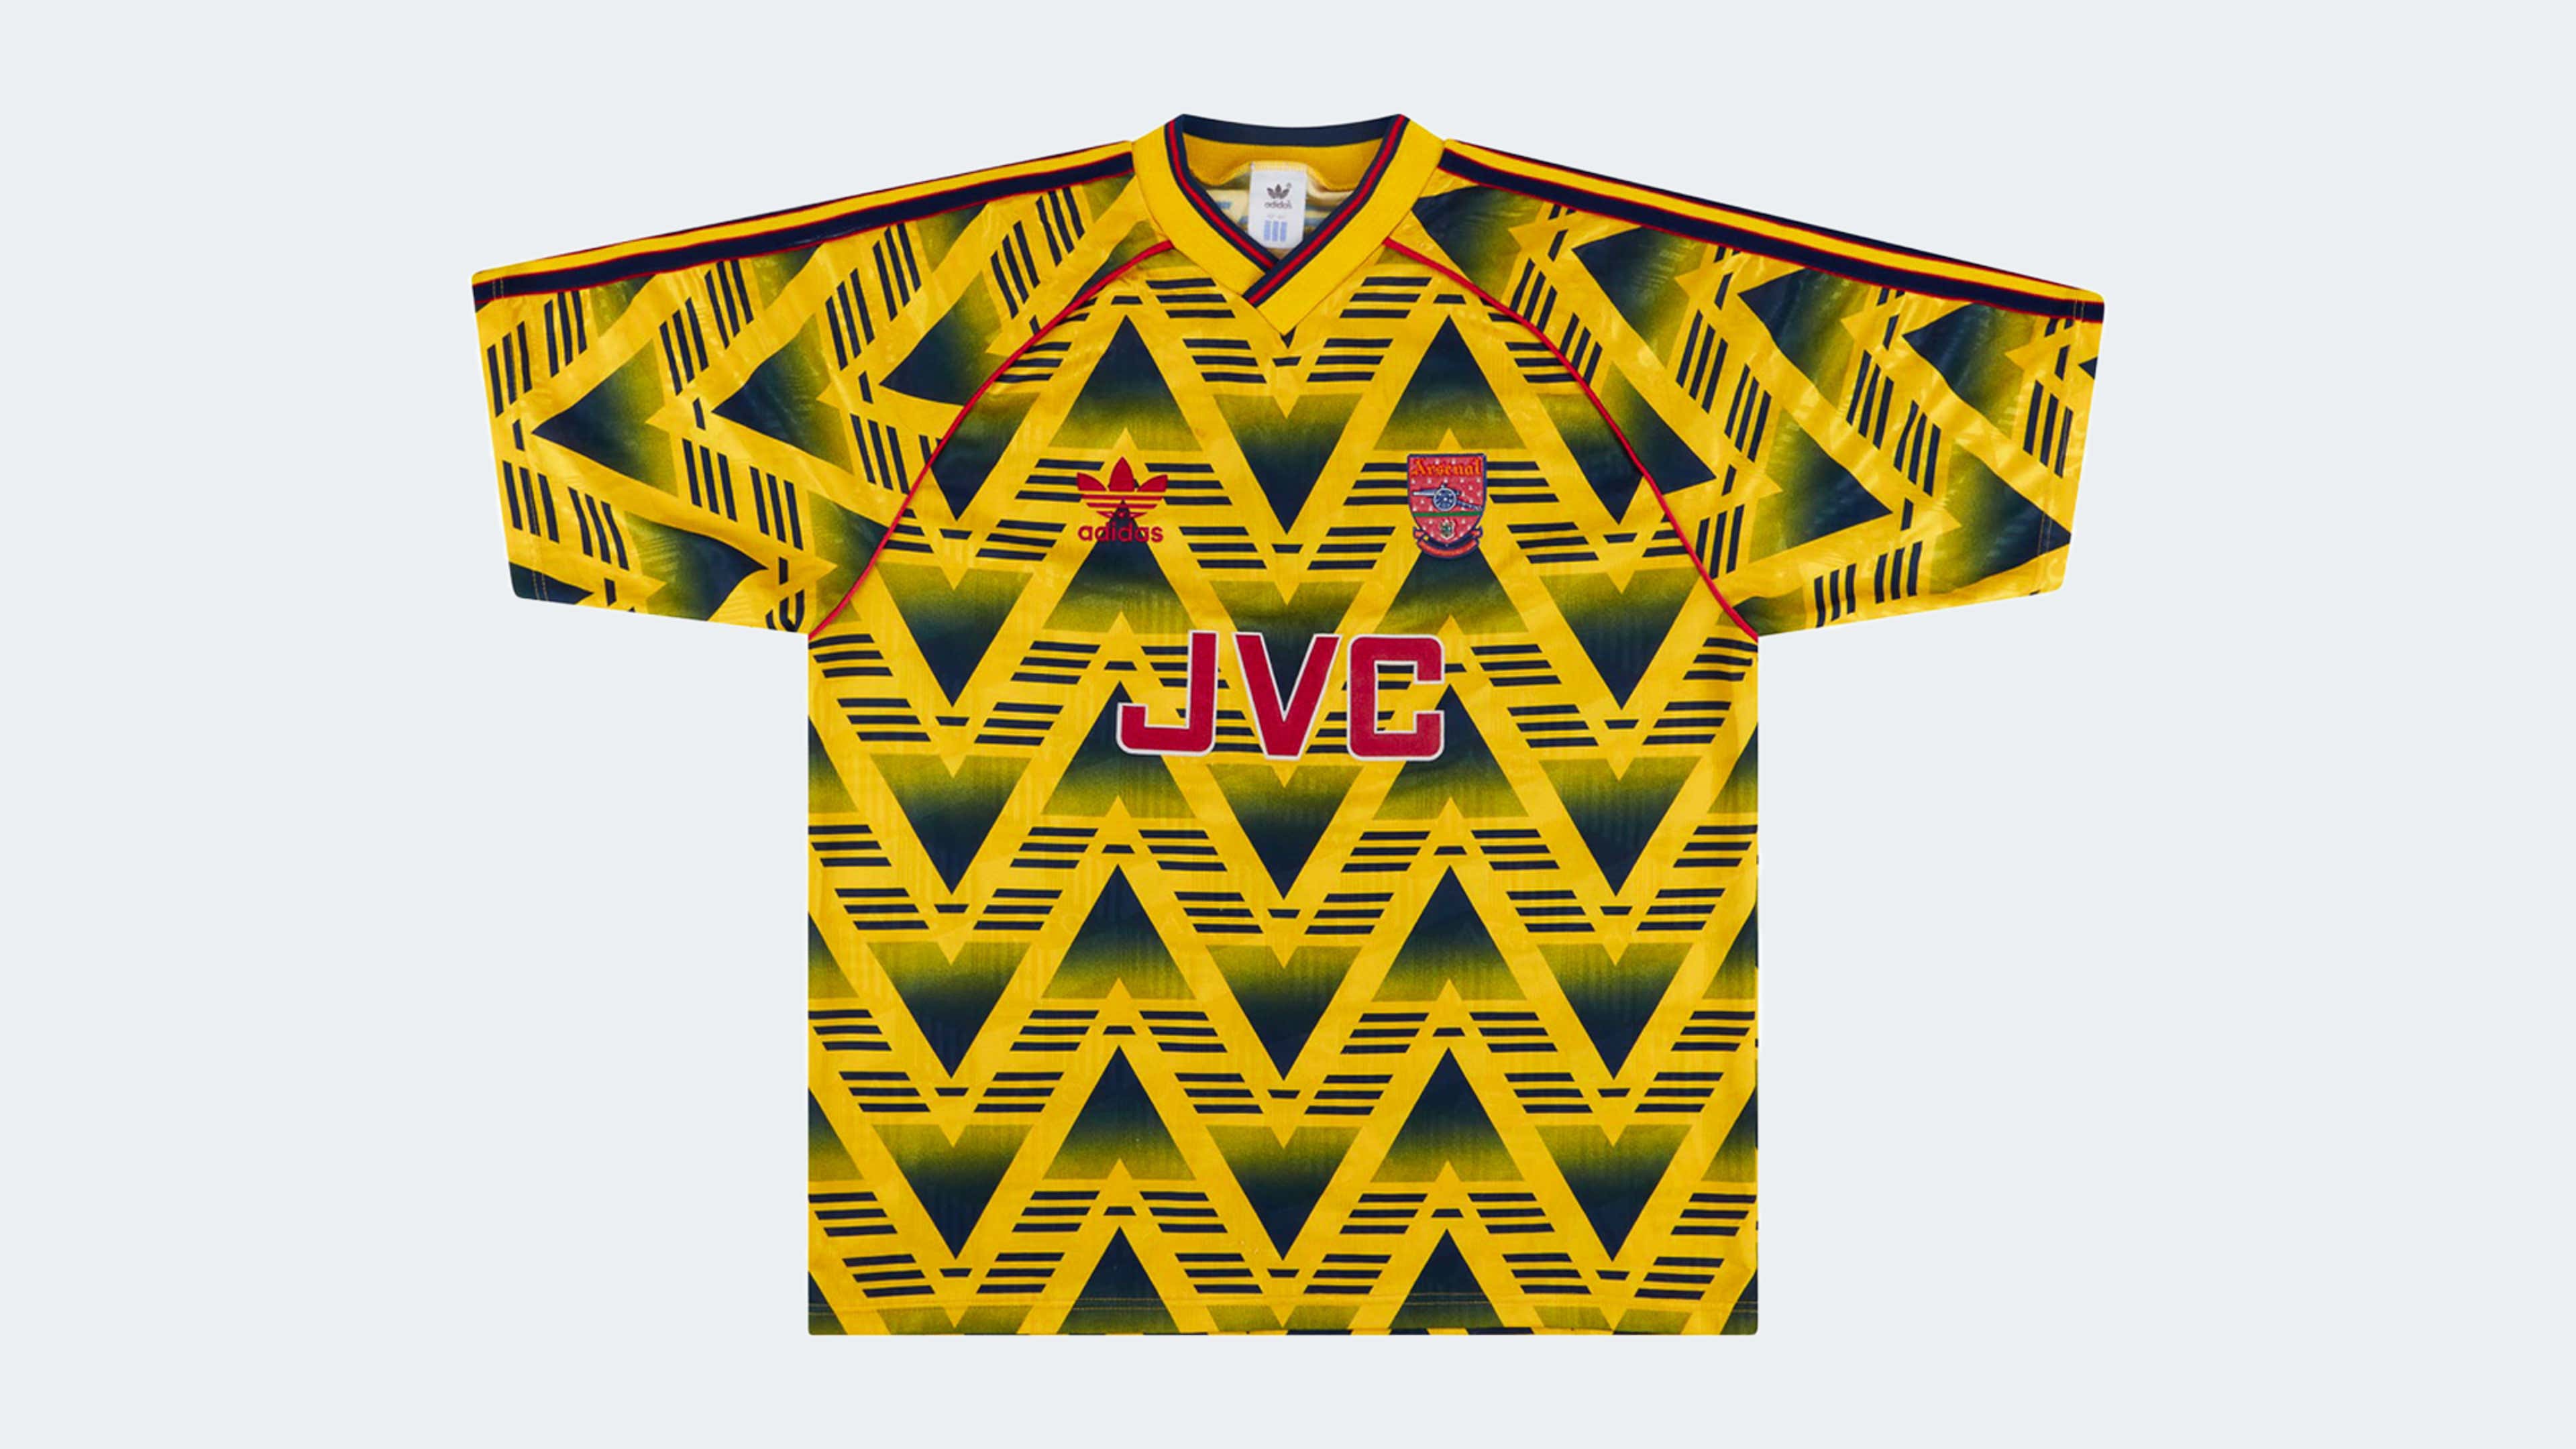 Classic Football Shirts  1990 Arsenal Vintage Old Soccer Jerseys